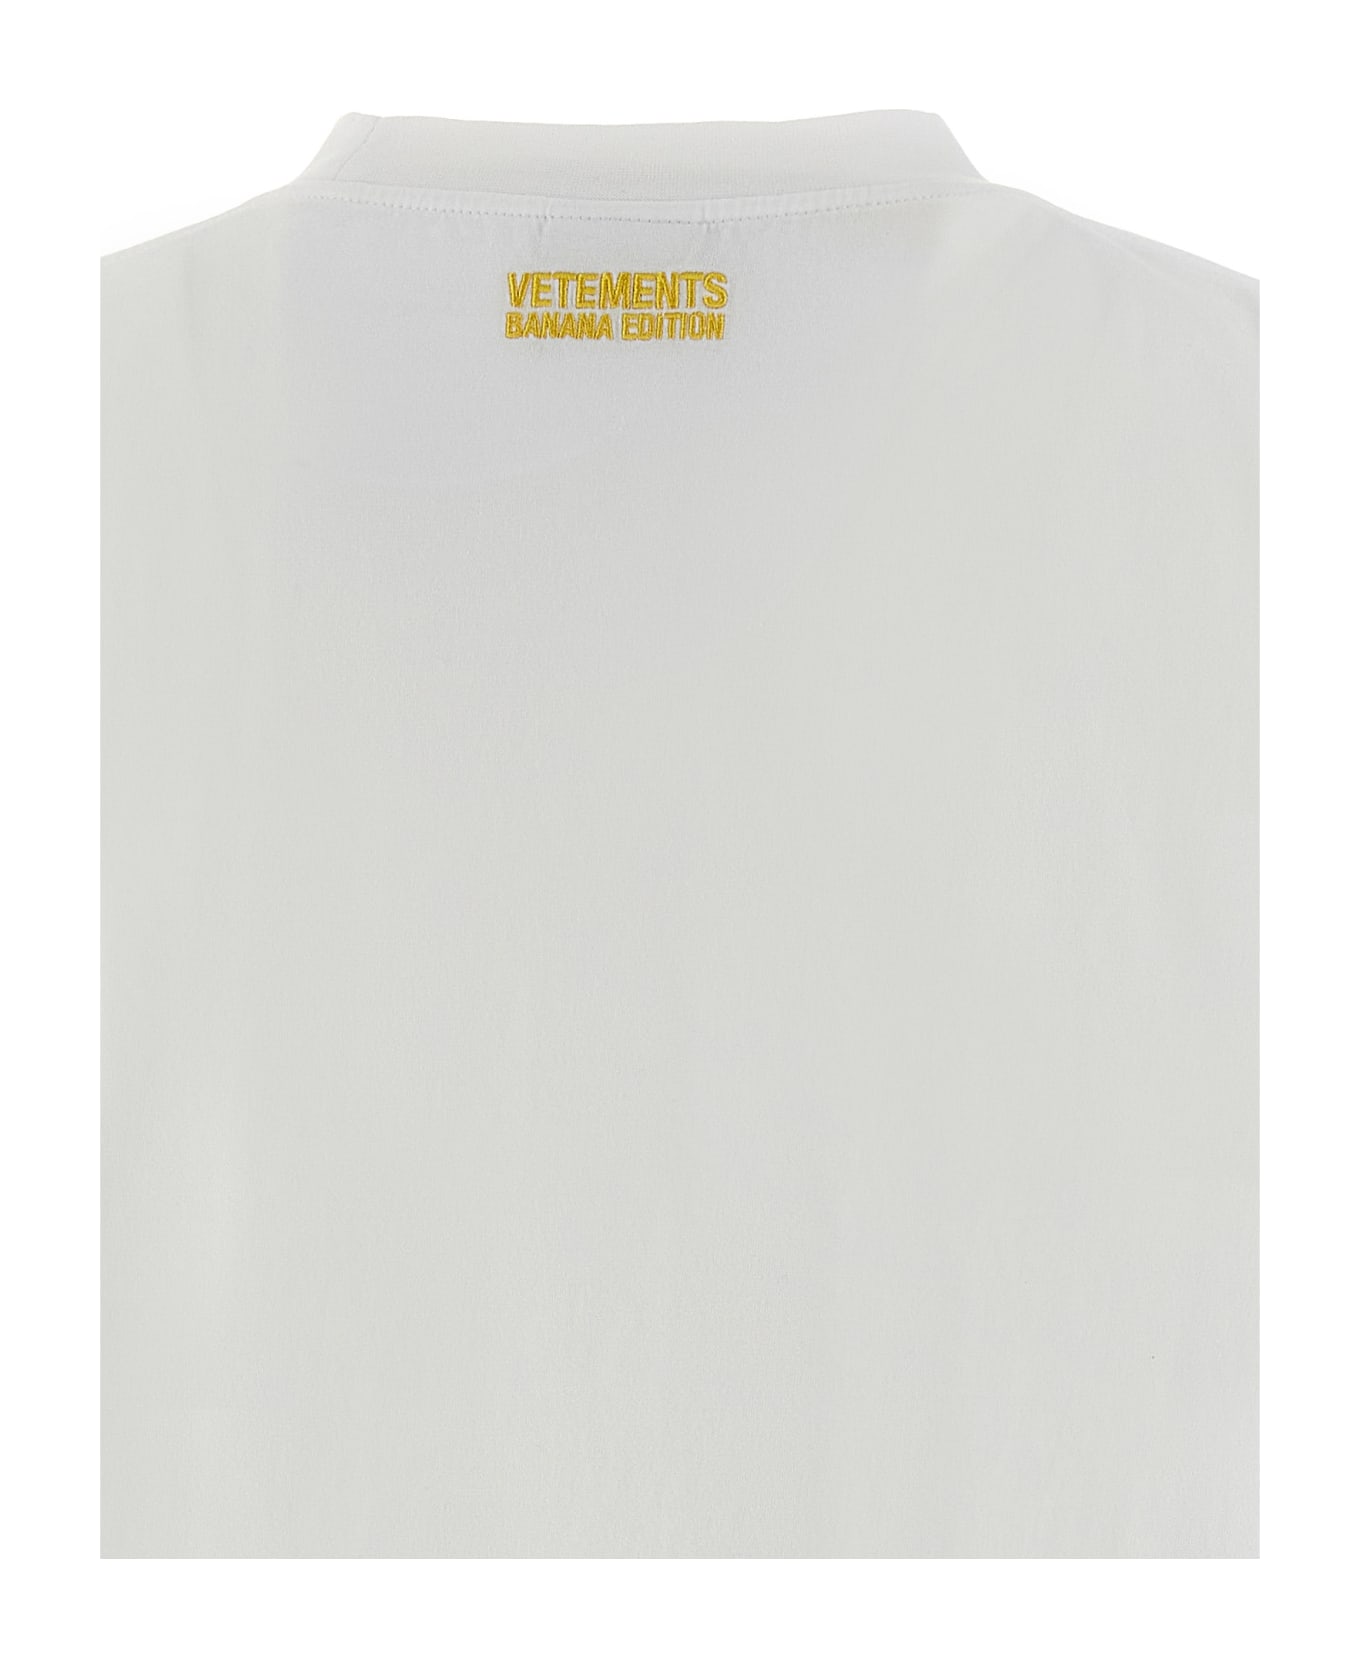 VETEMENTS 'banana' T-shirt - White